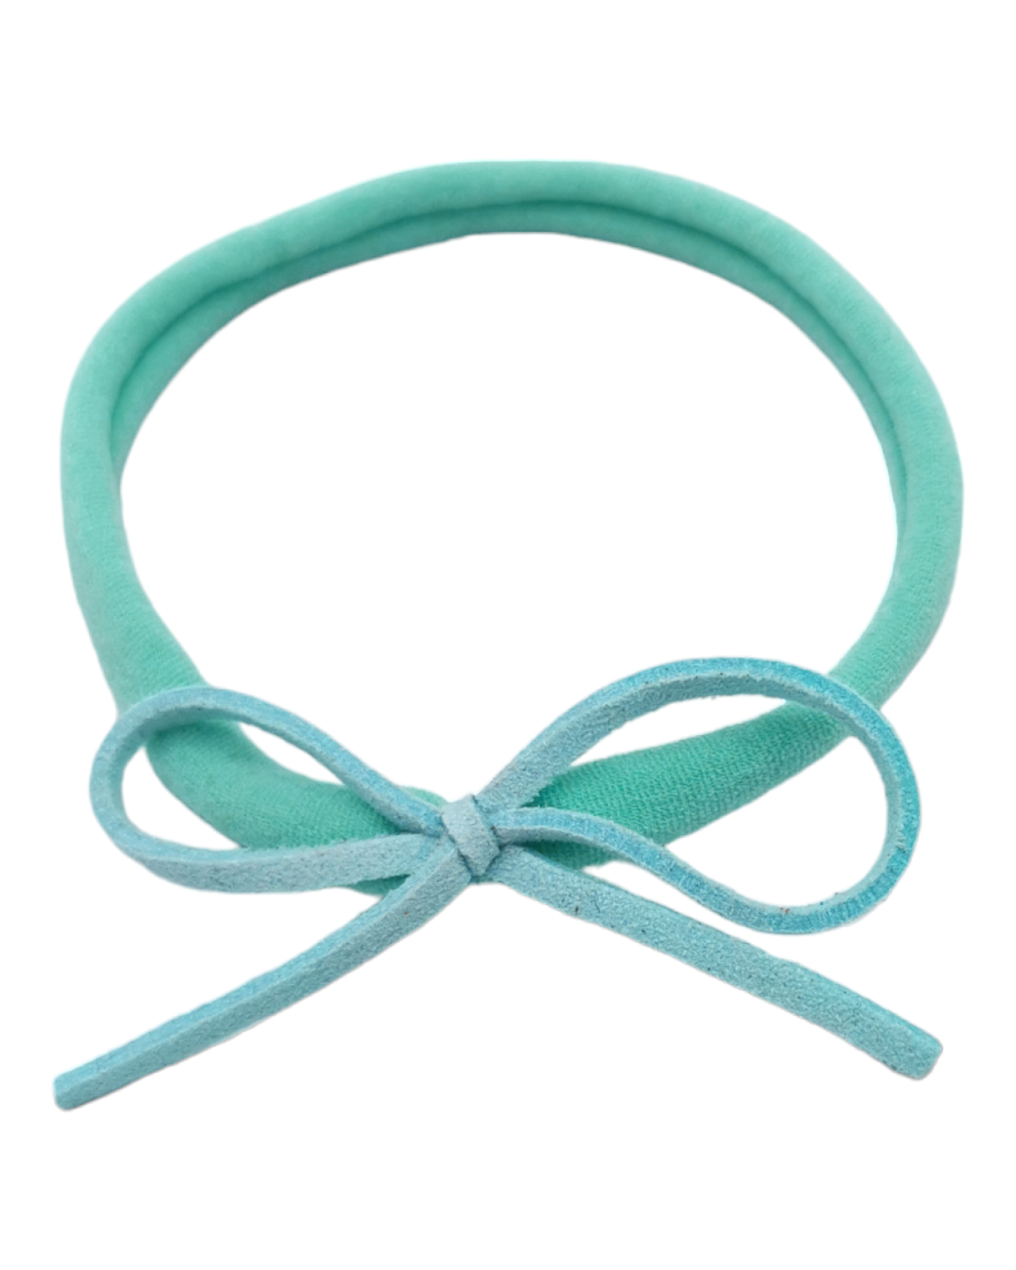 Turquoise/Green Mini Cord Dainty Bow Headband - Betty Brown Boutique Ltd